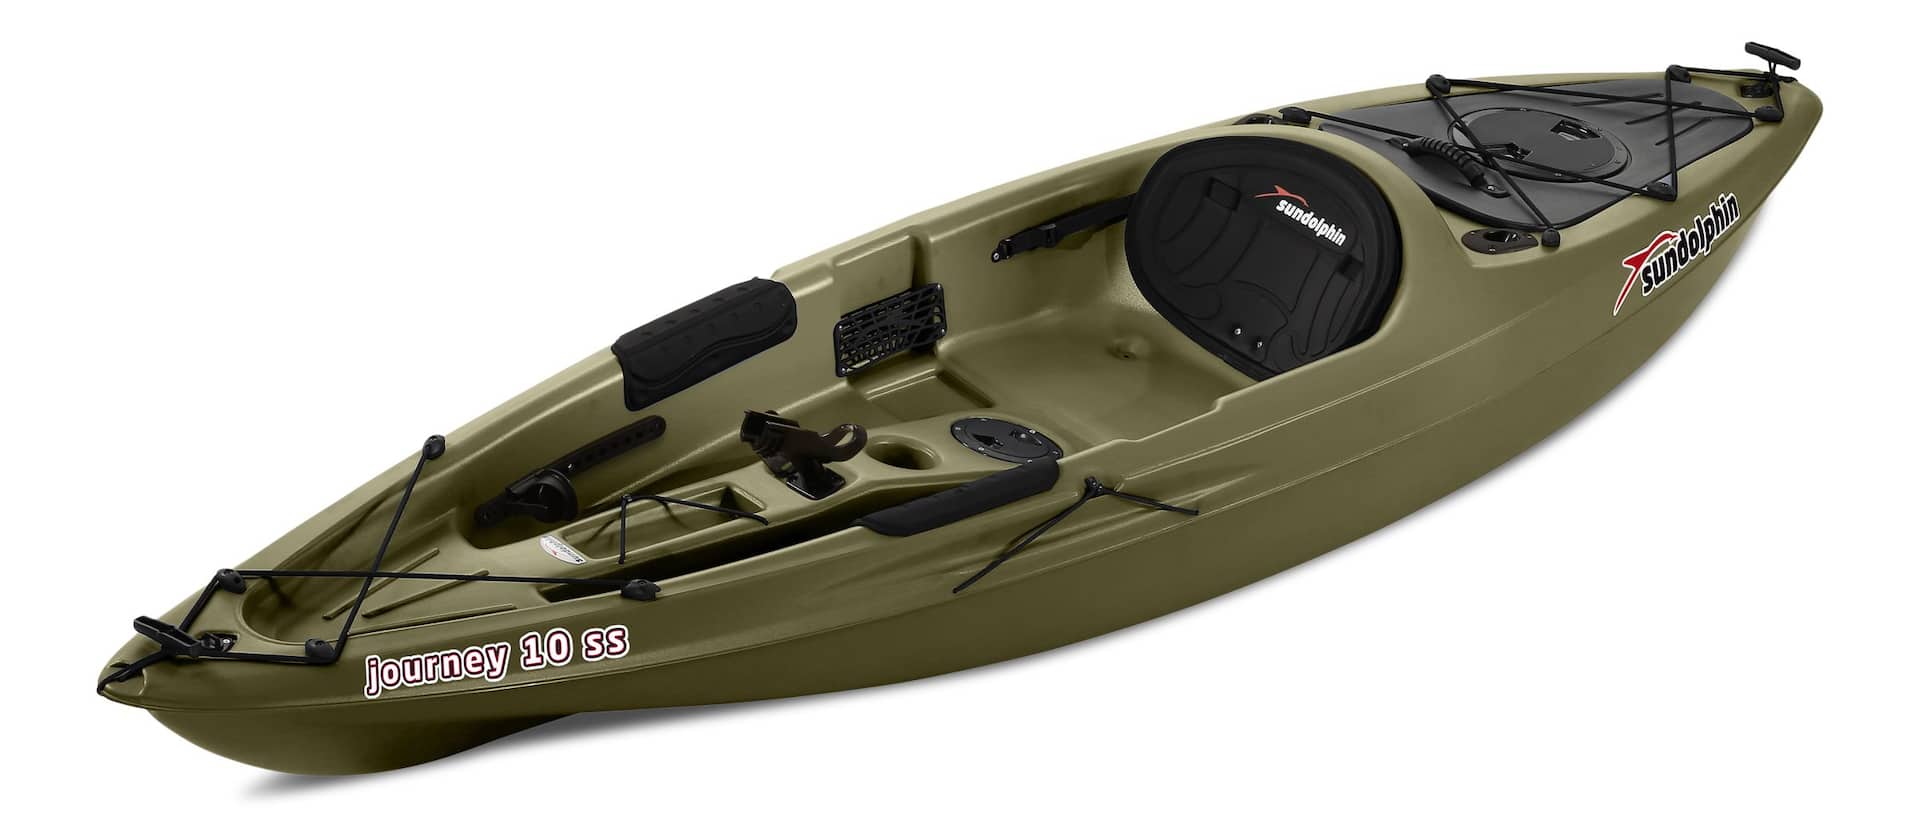 https://media-www.canadiantire.ca/product/playing/seasonal-recreation/marine-water-fun/0798336/sun-dolphin-10-journey-fishing-kayak-ed8326f9-e441-4eb1-81cb-196707047df6-jpgrendition.jpg